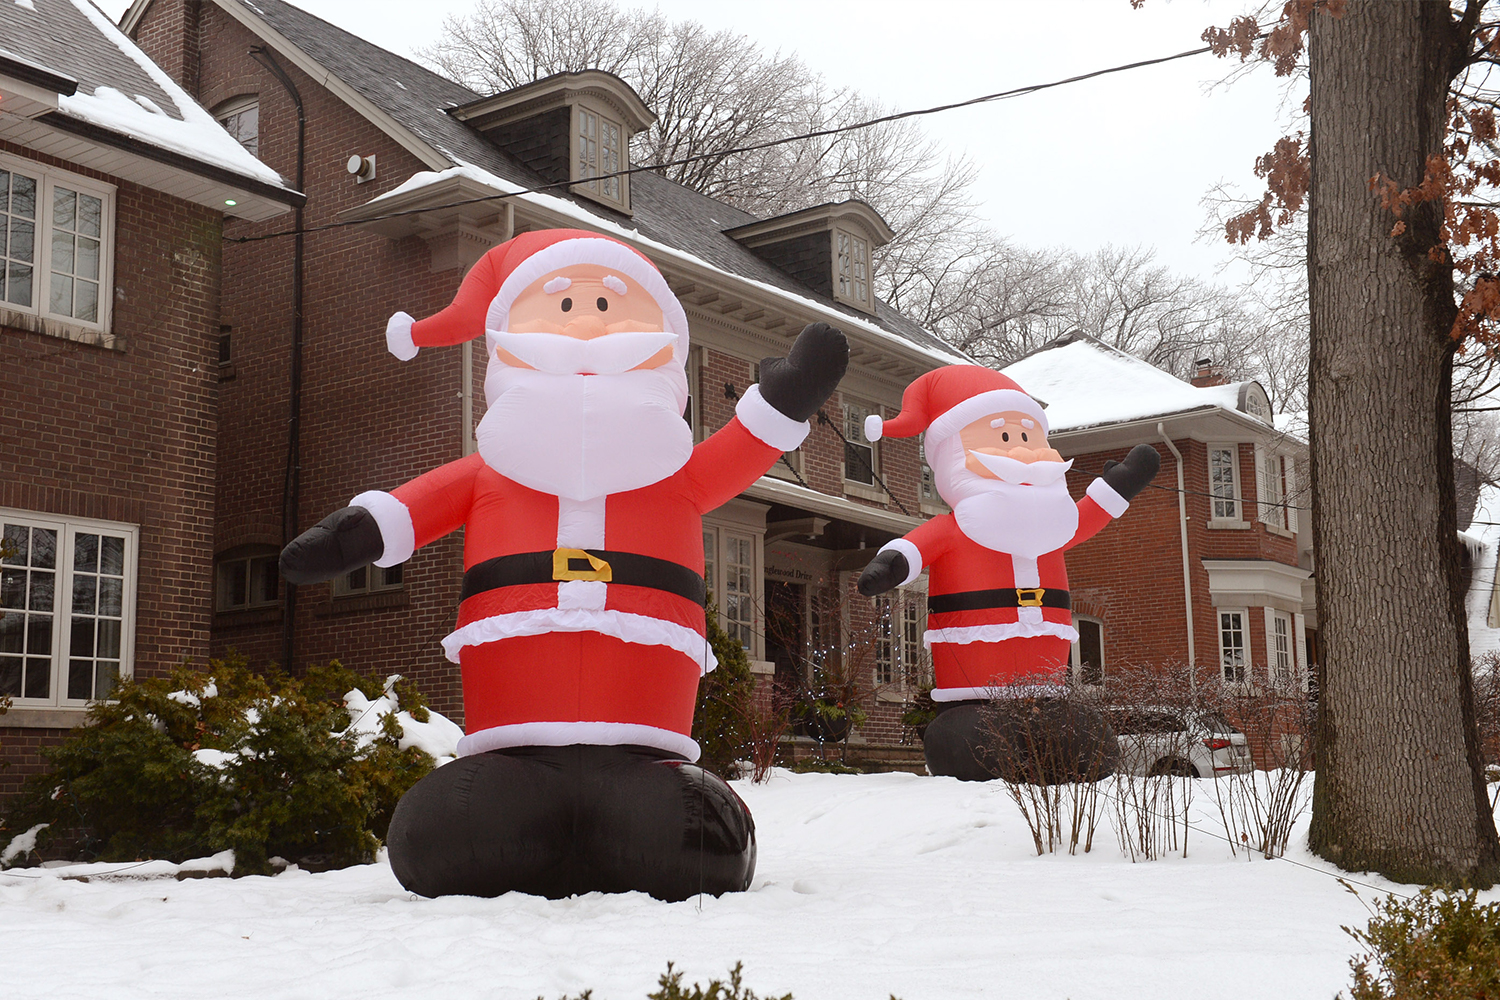 Inflatable Christmas Car Buddy - Snowman, Santa Claus, or The